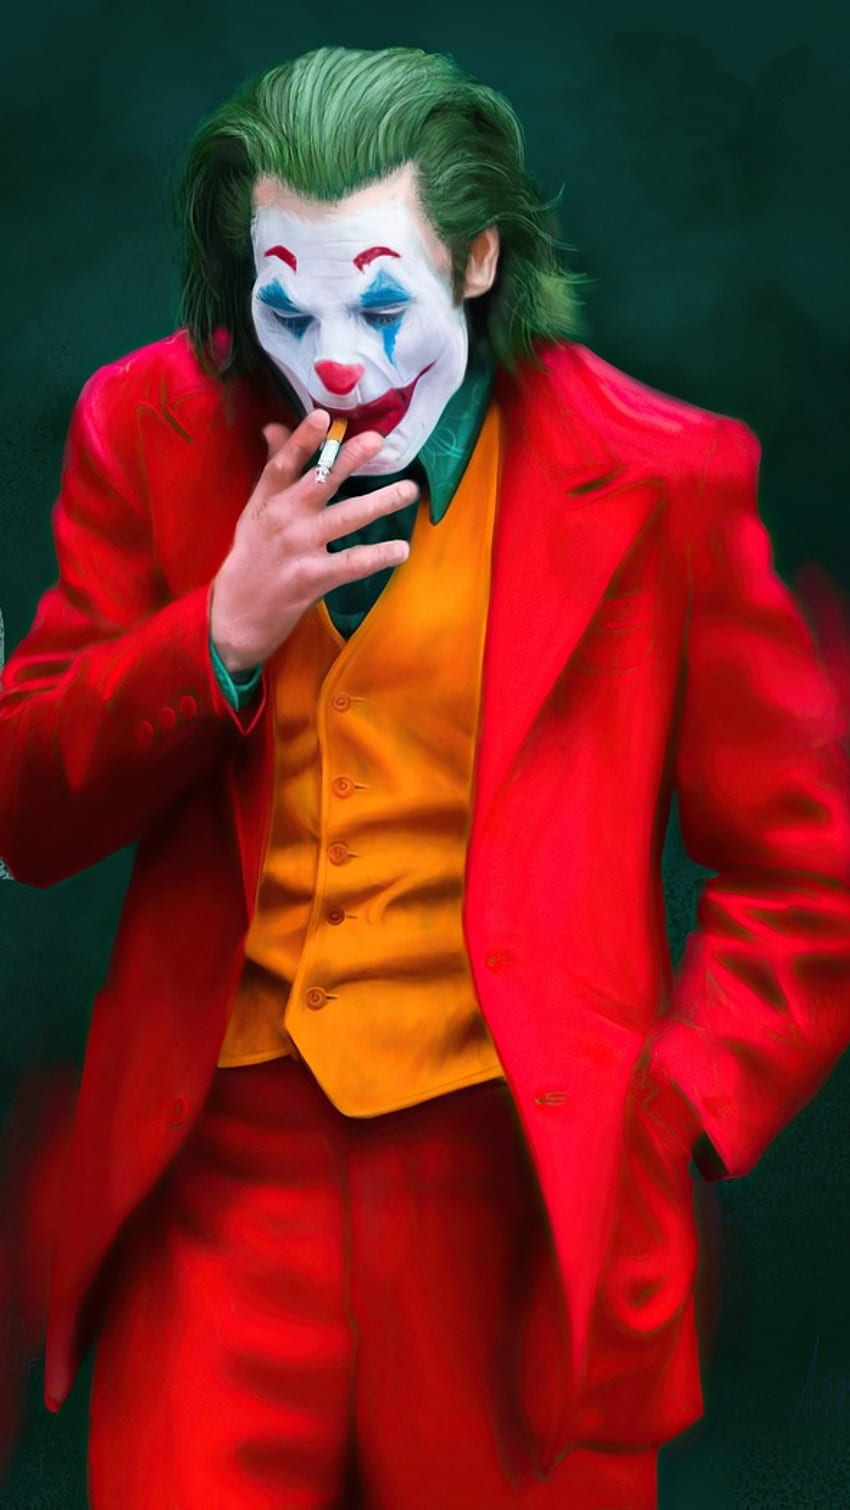 Joker DC Comics movie characters red clowns 1080P wallpaper  hdwallpaper desktop  Joker wallpapers Joker poster Joker